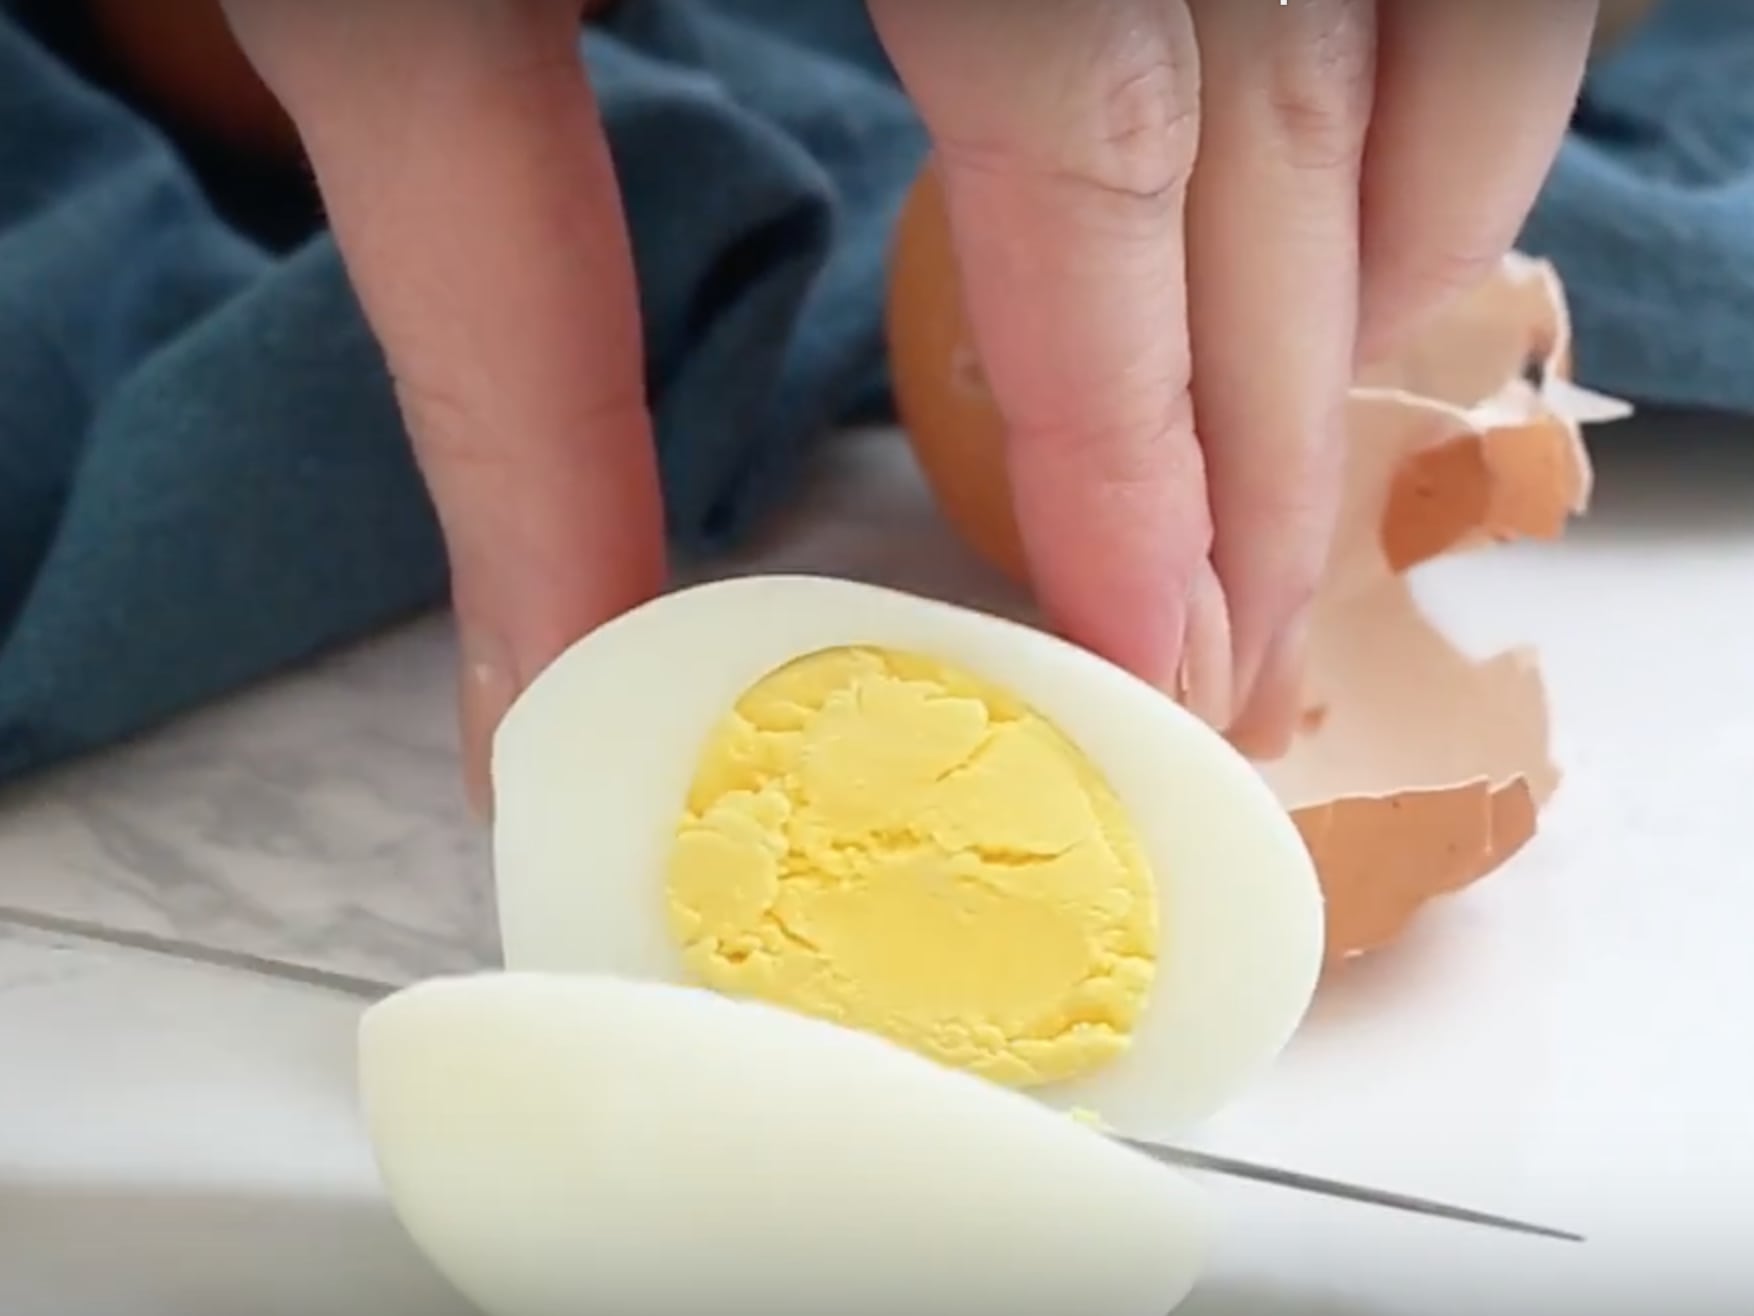 How To Make Instant Pot Hard Boiled Eggs - Platings + Pairings